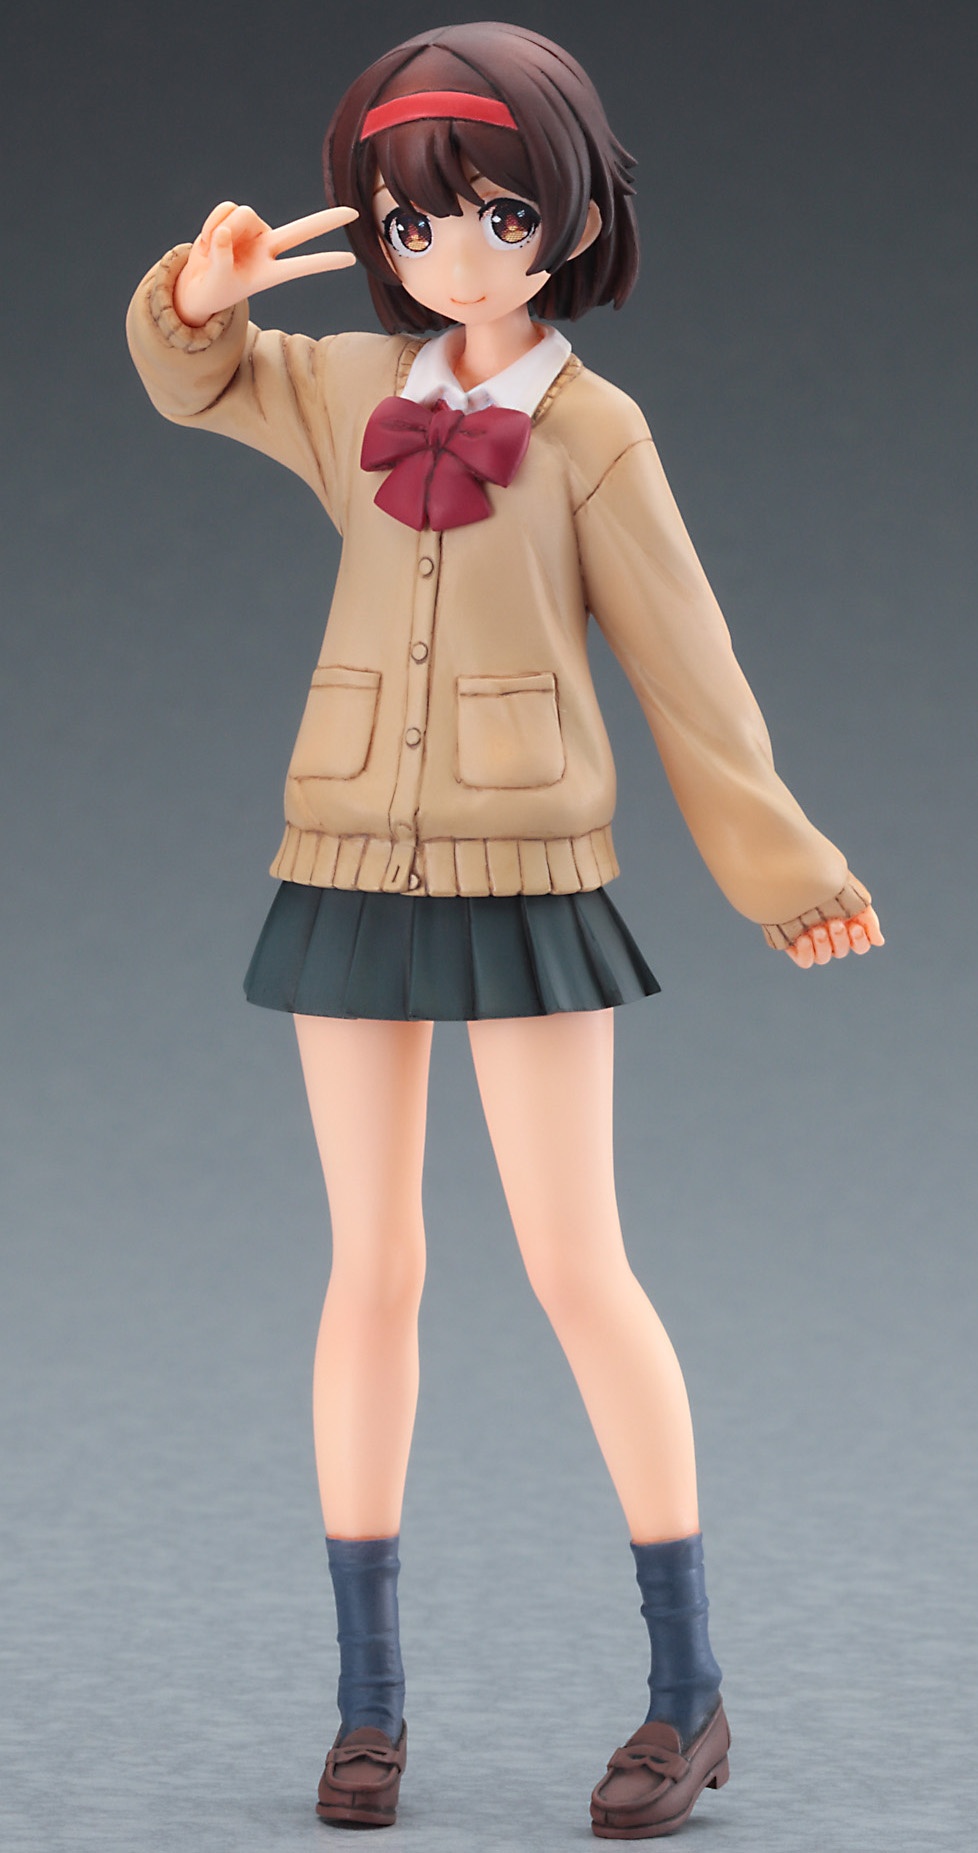 1/12 Resin Figure Model Kit Japanese Girl in School Uniform Unpainted Unassamble 